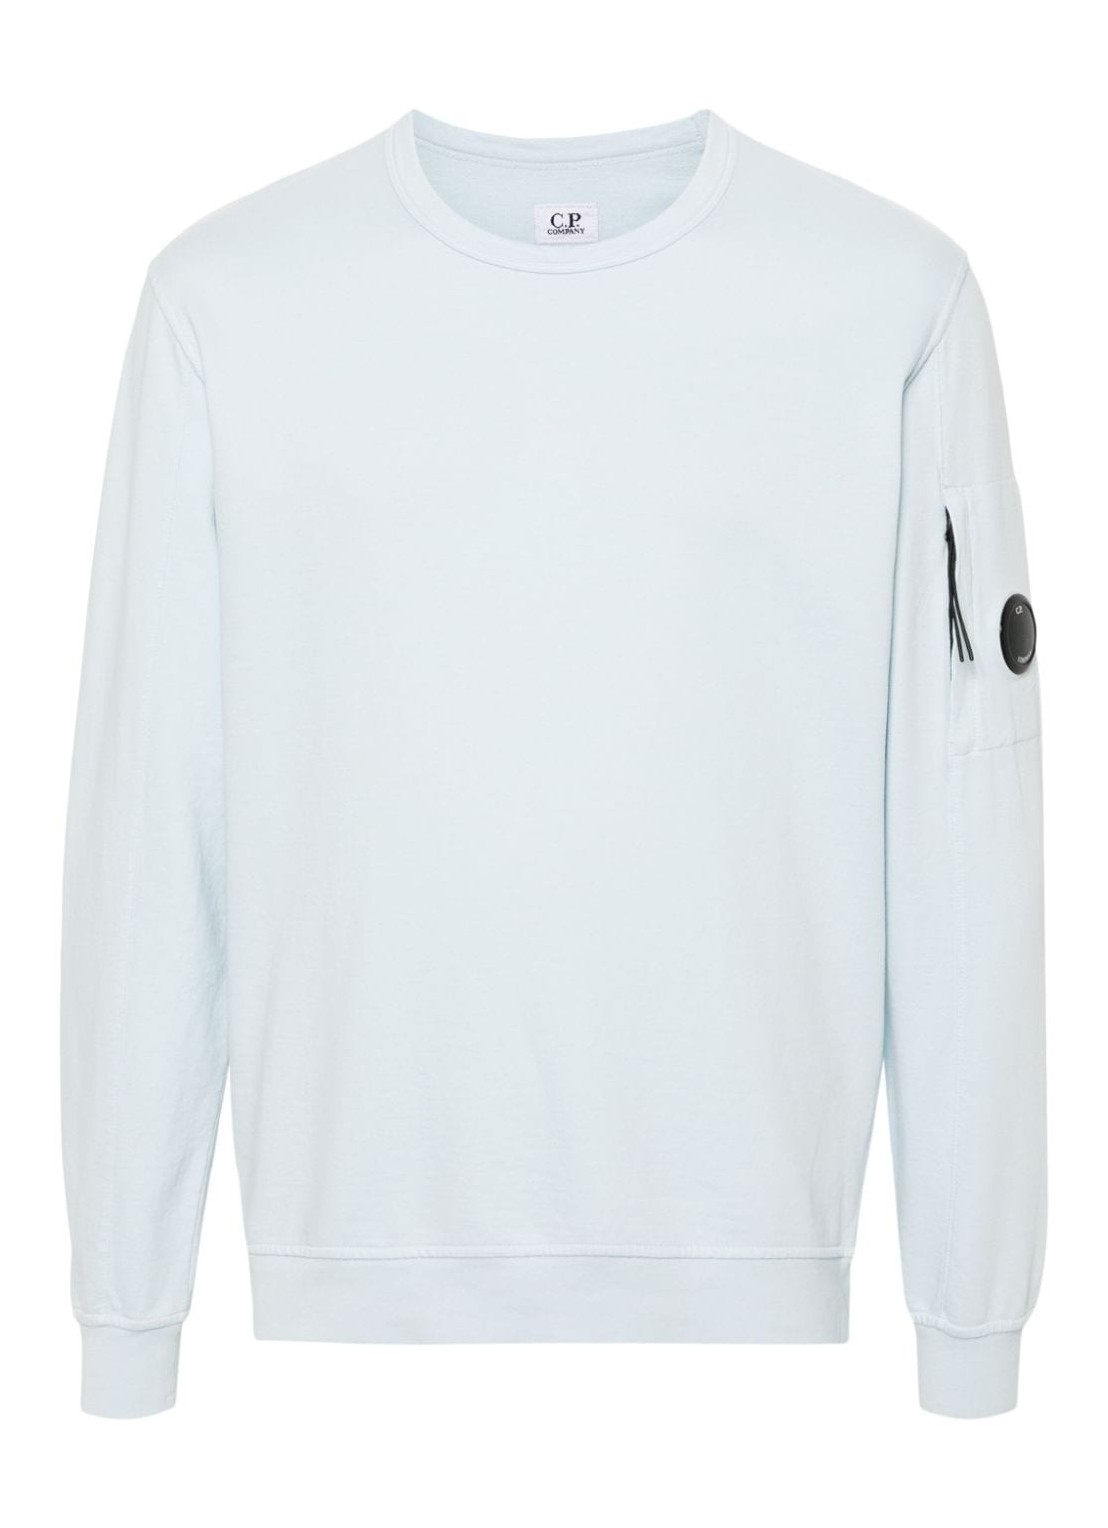 Sudadera c.p.company sweater man light fleece sweatshirt 16cmss032a002246g 806 talla L
 